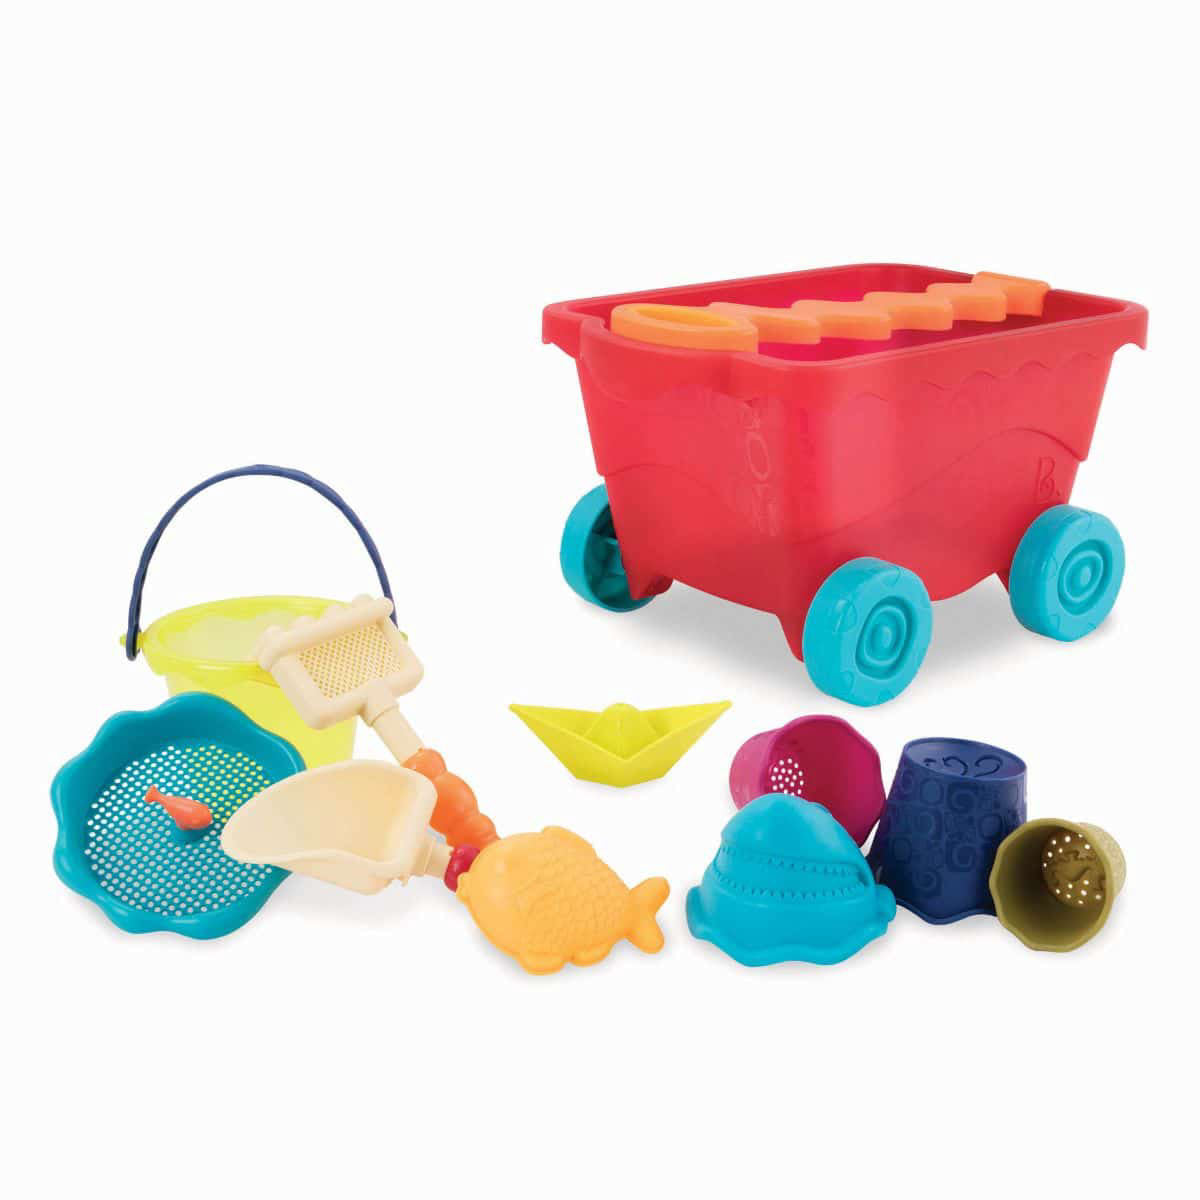 B Toys Wavy Wagon Sand Playset